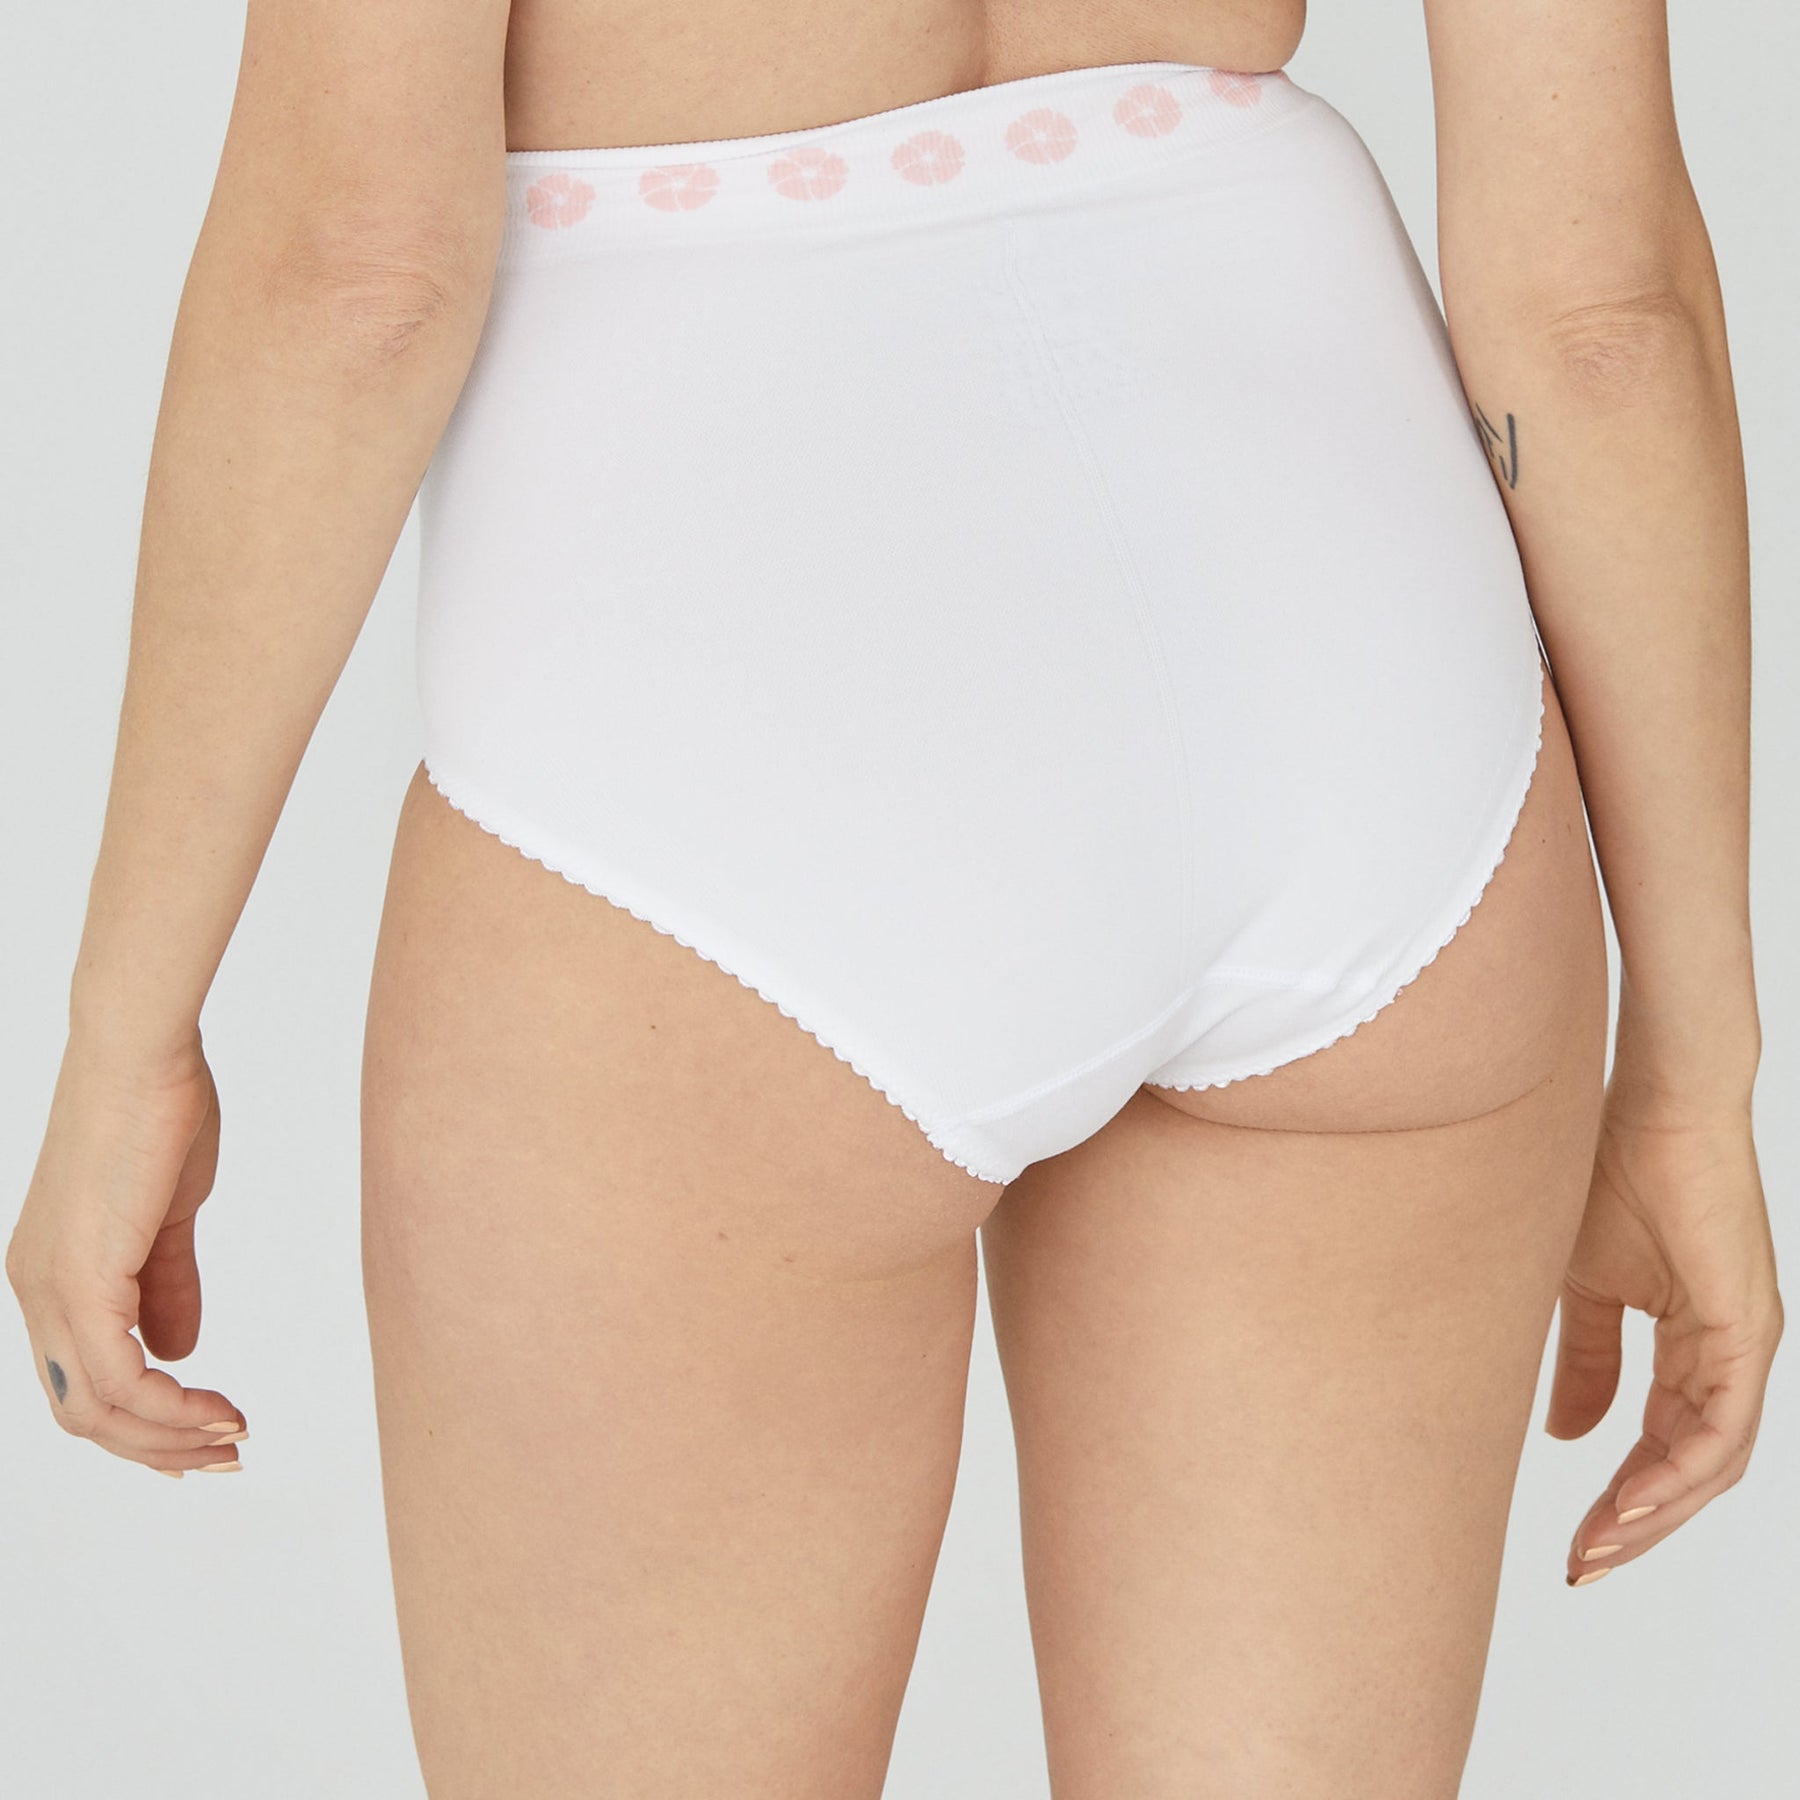 SG SELLER]Girl Premium Organic Cotton Kids Underwear/Panties/Brief